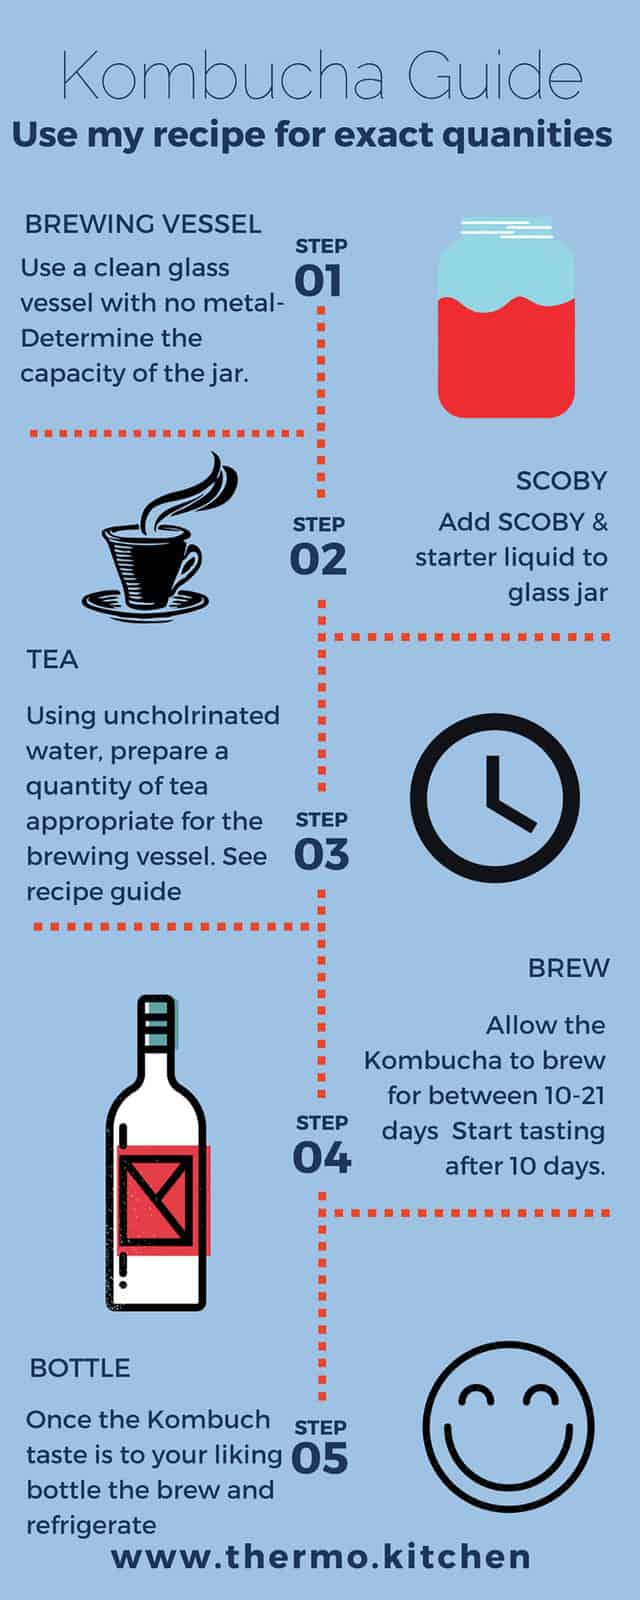 Informational flow chart describing how to make Kombucha tea